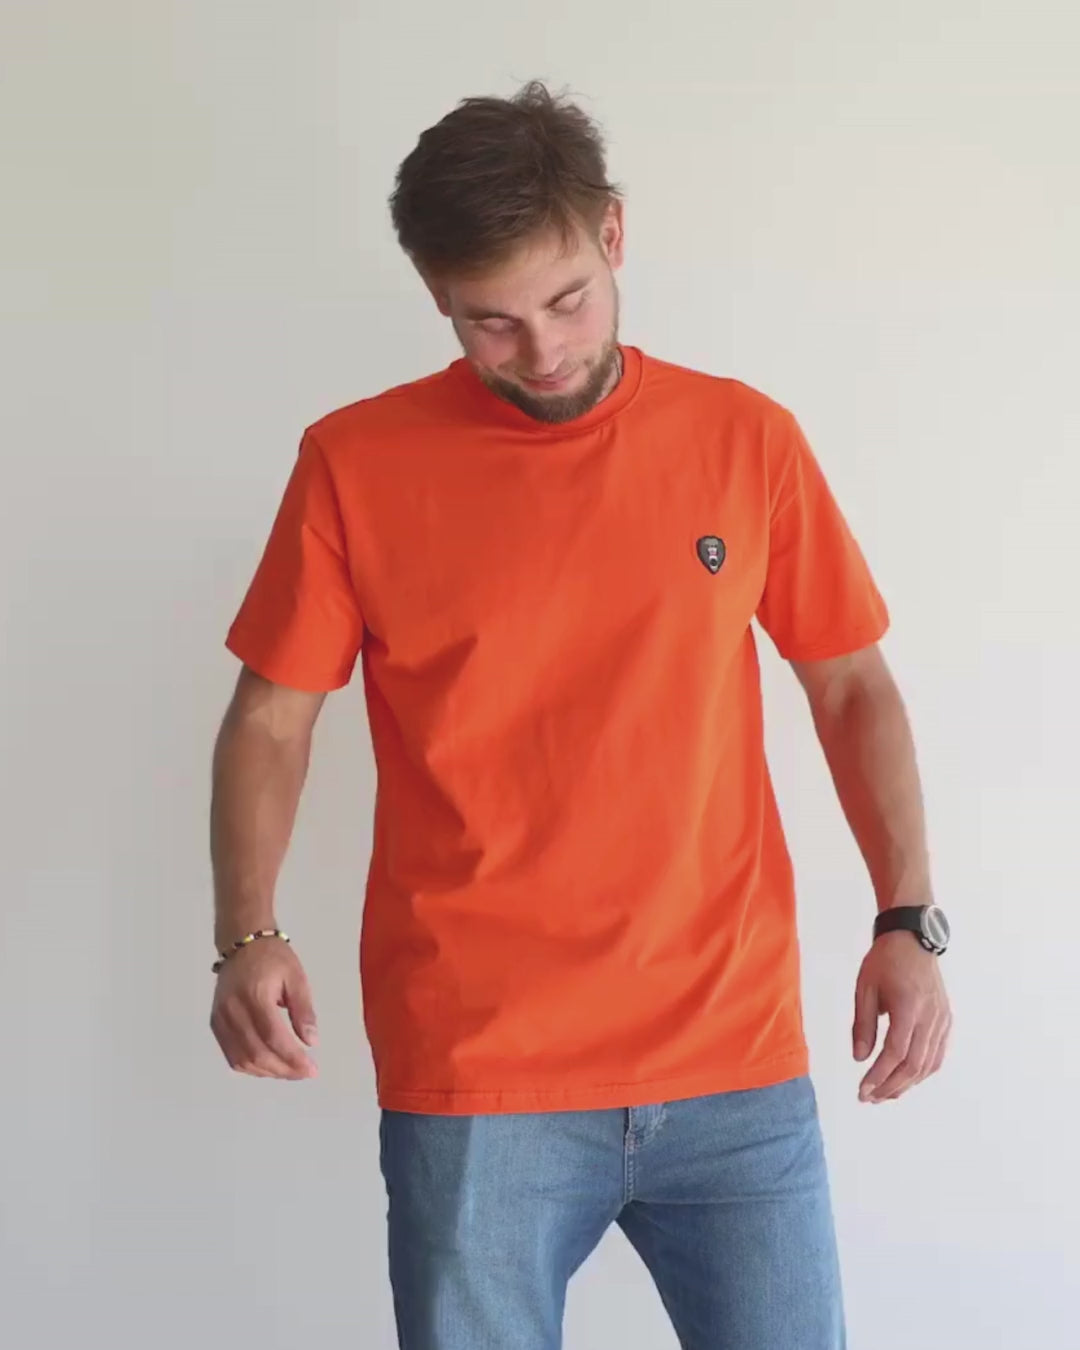 A model wearing Orange Mad Chuck Shirt